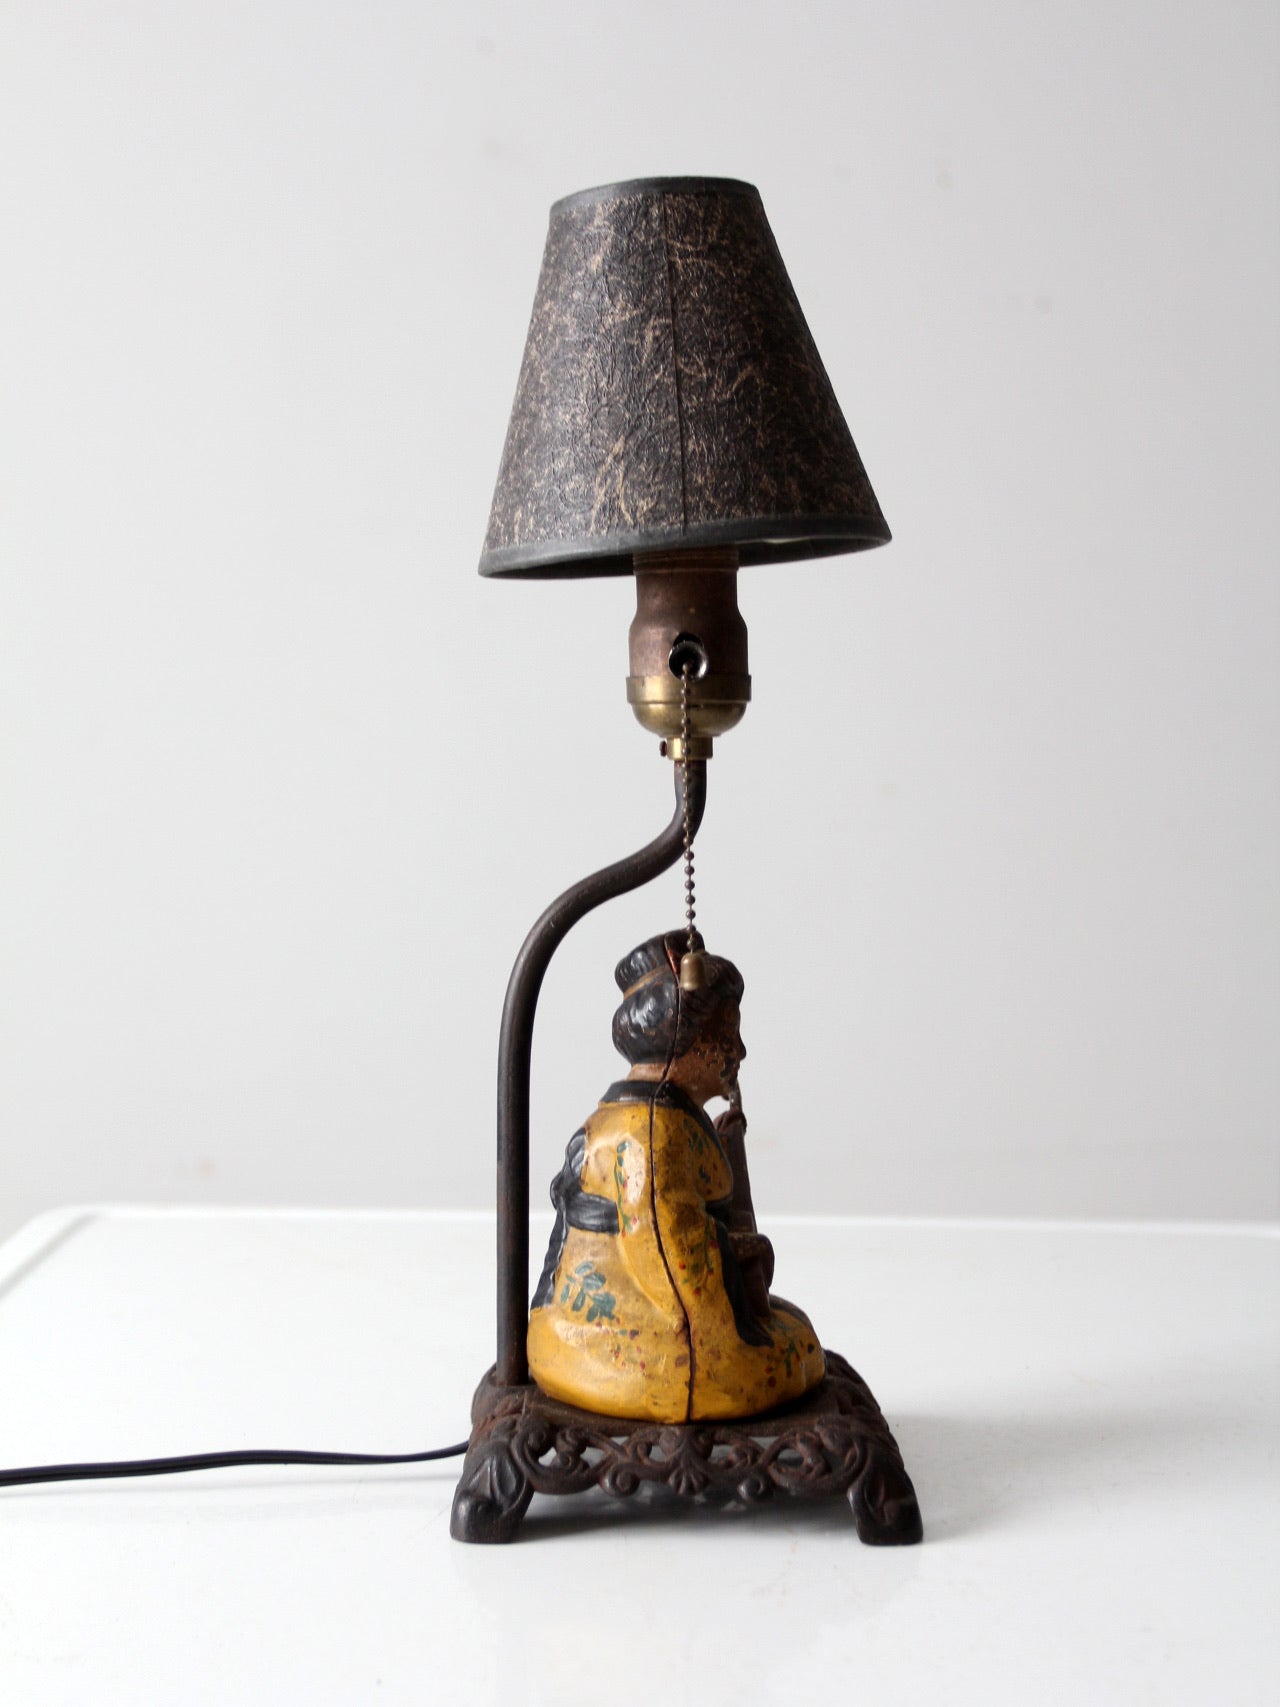 Hubley cast iron lamp circa 1930